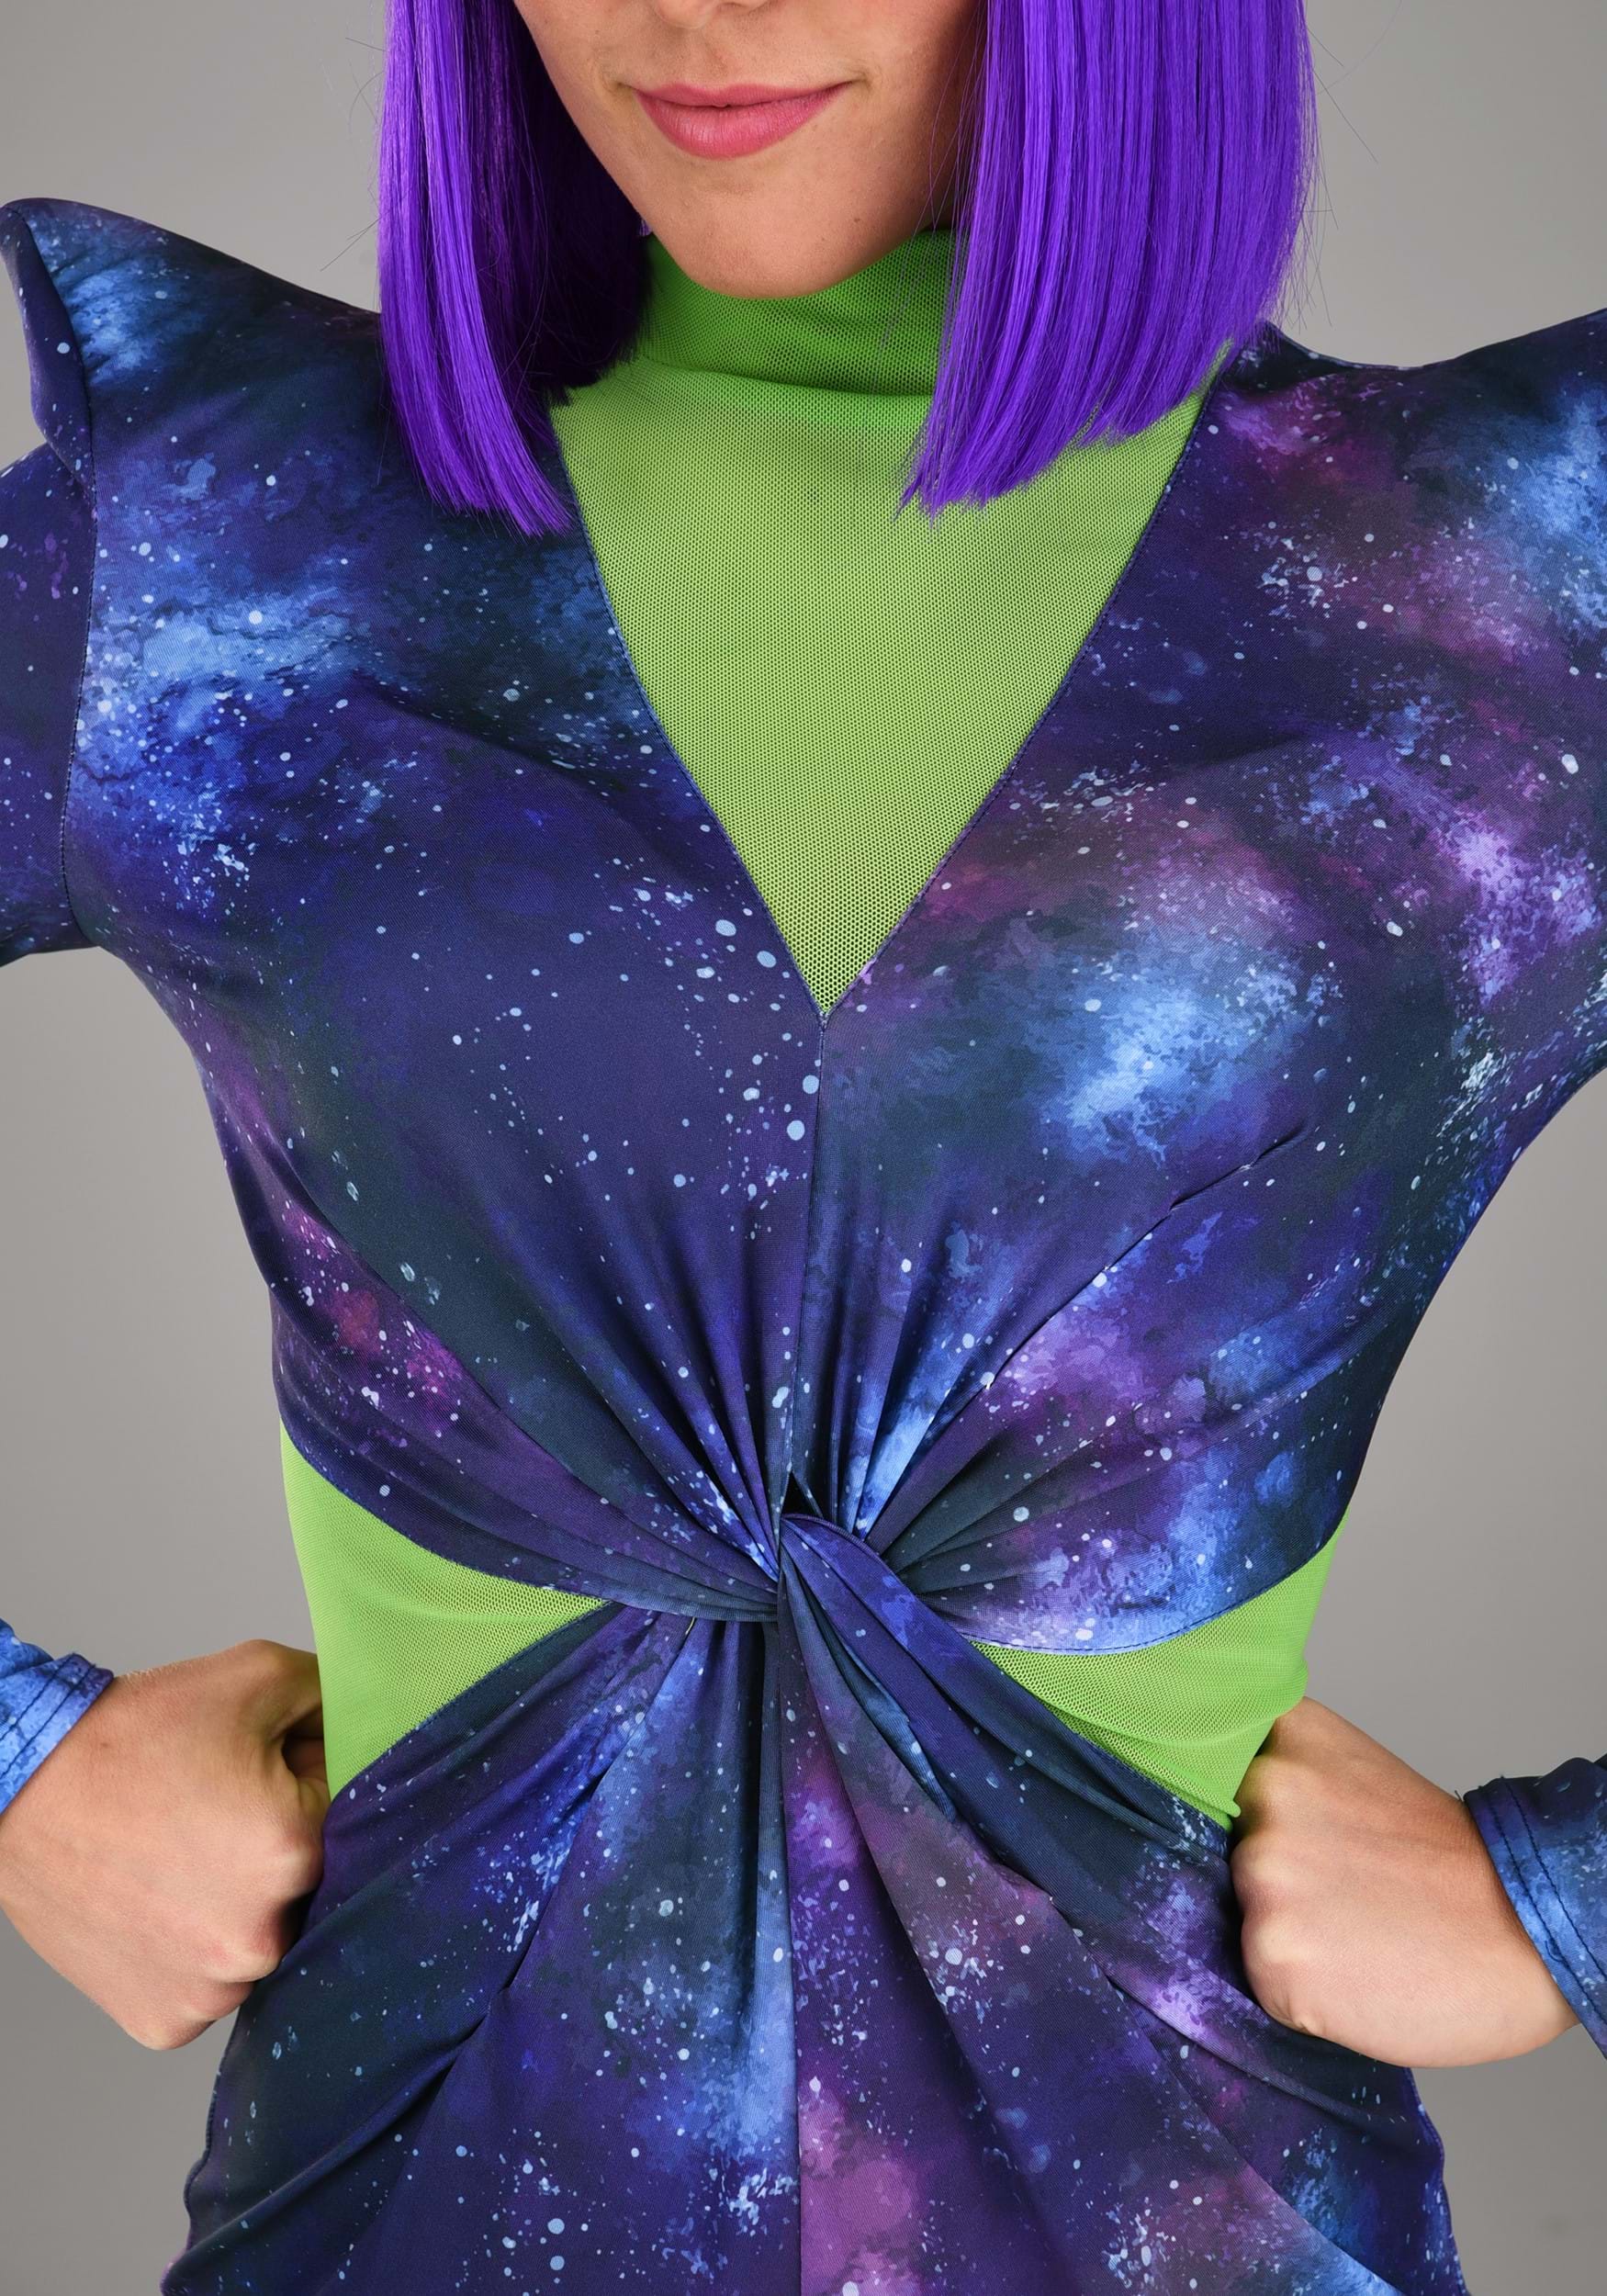 Sexy Cosmic Alien Adult Costume